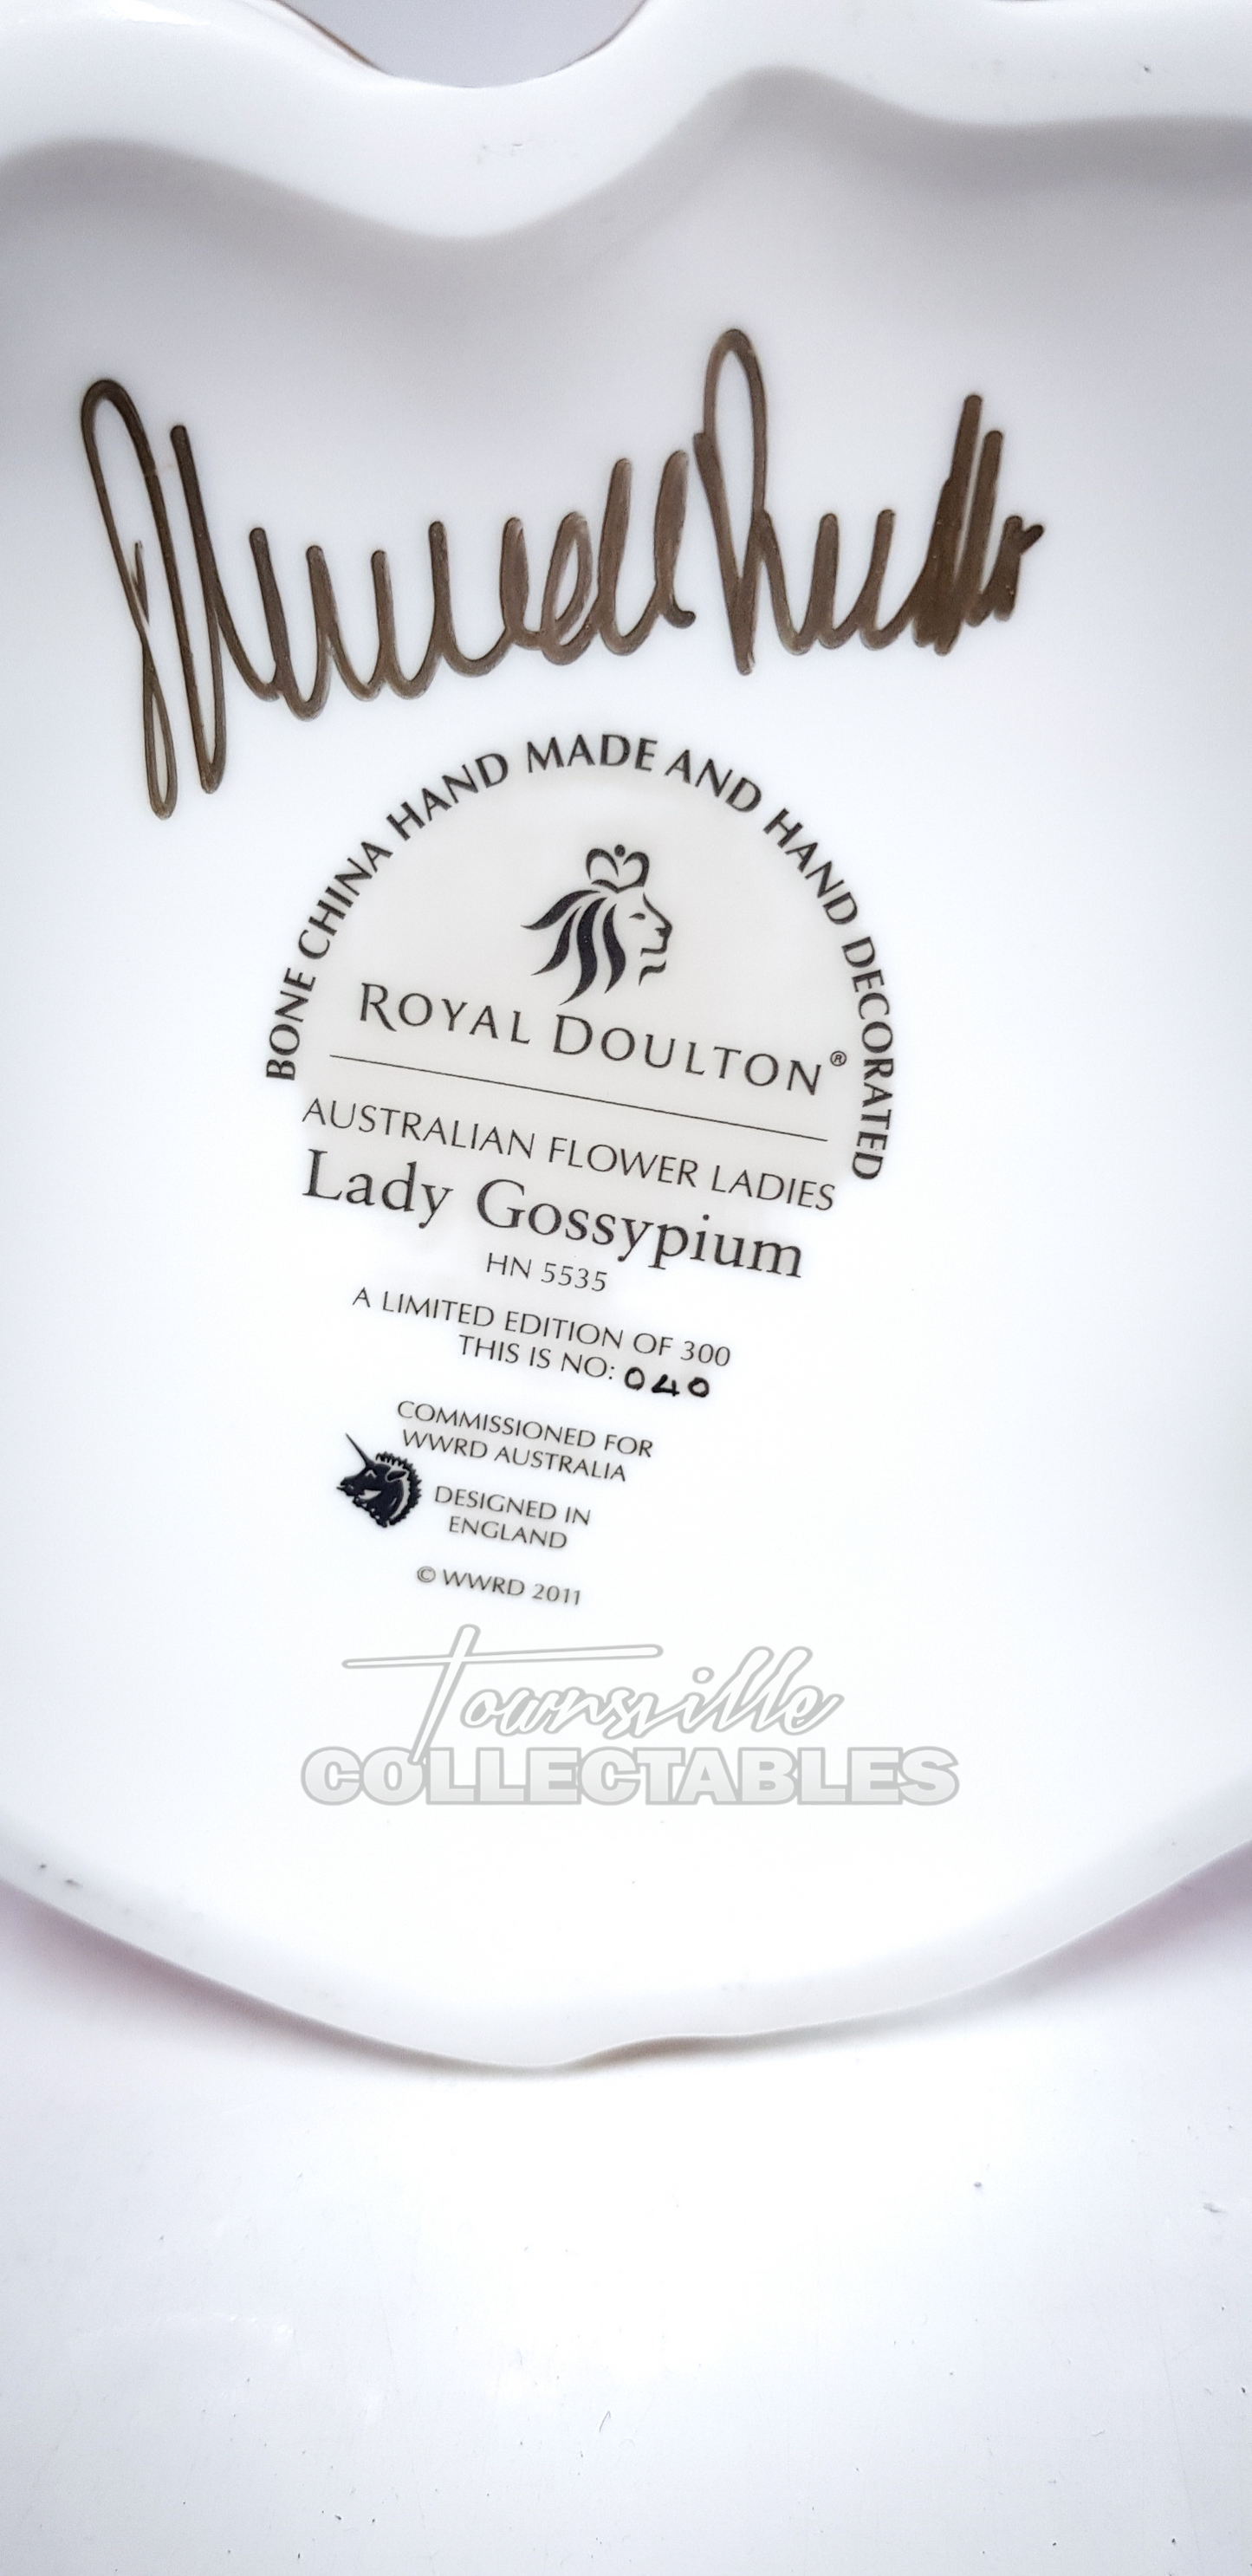 Royal Doulton Australian Flower Ladies Lady Gossypium